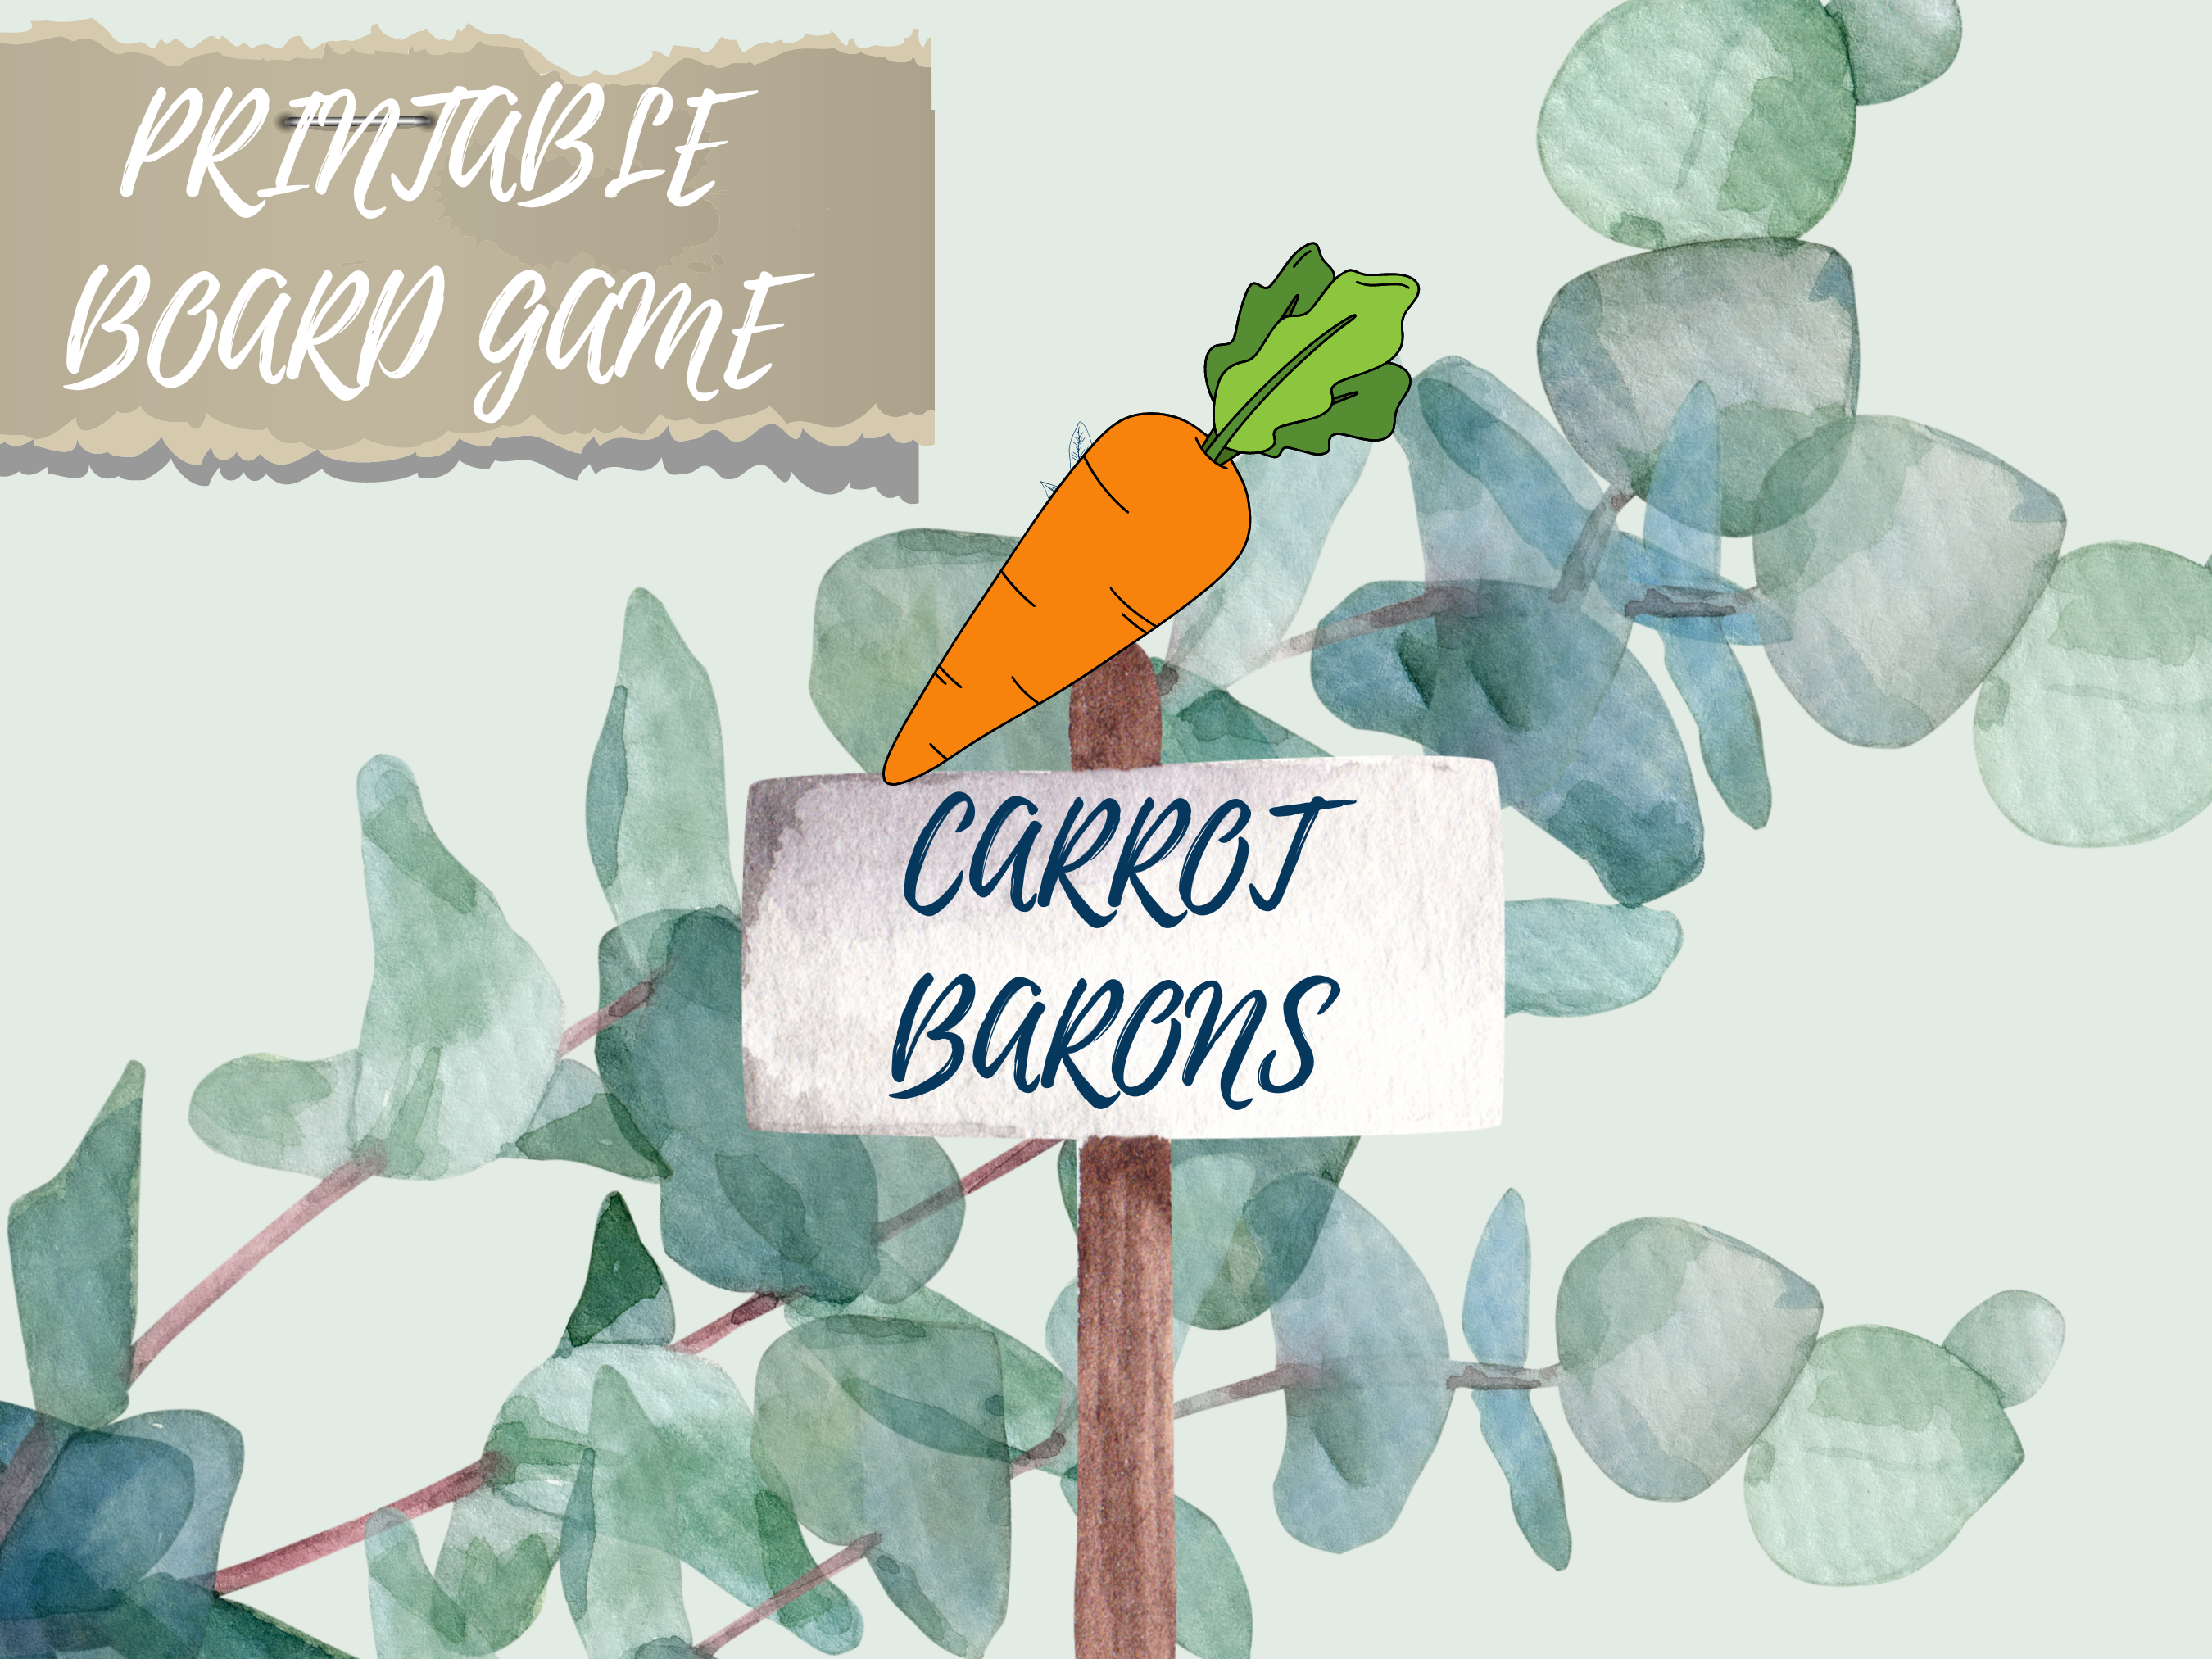 carrot barons board game